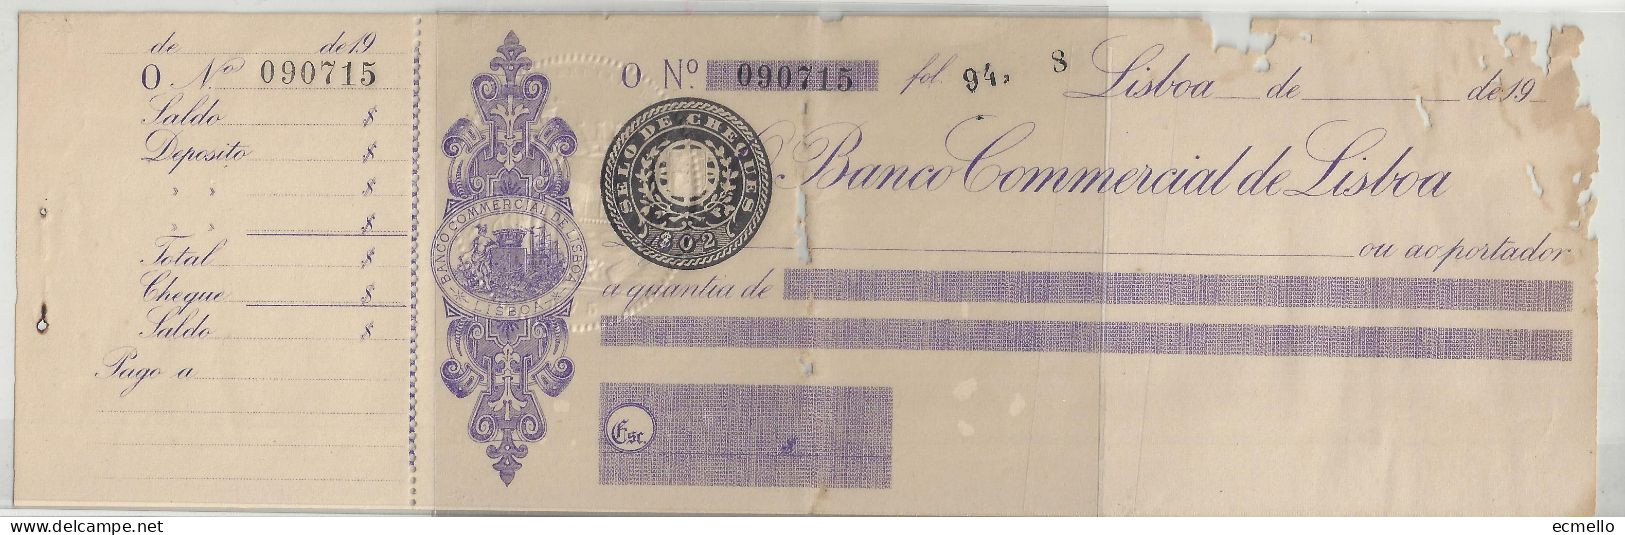 PORTUGAL CHEQUE CHECK BANCO COMERCIAL DE LISBOA 1910'S SCARCE - Cheques En Traveller's Cheques